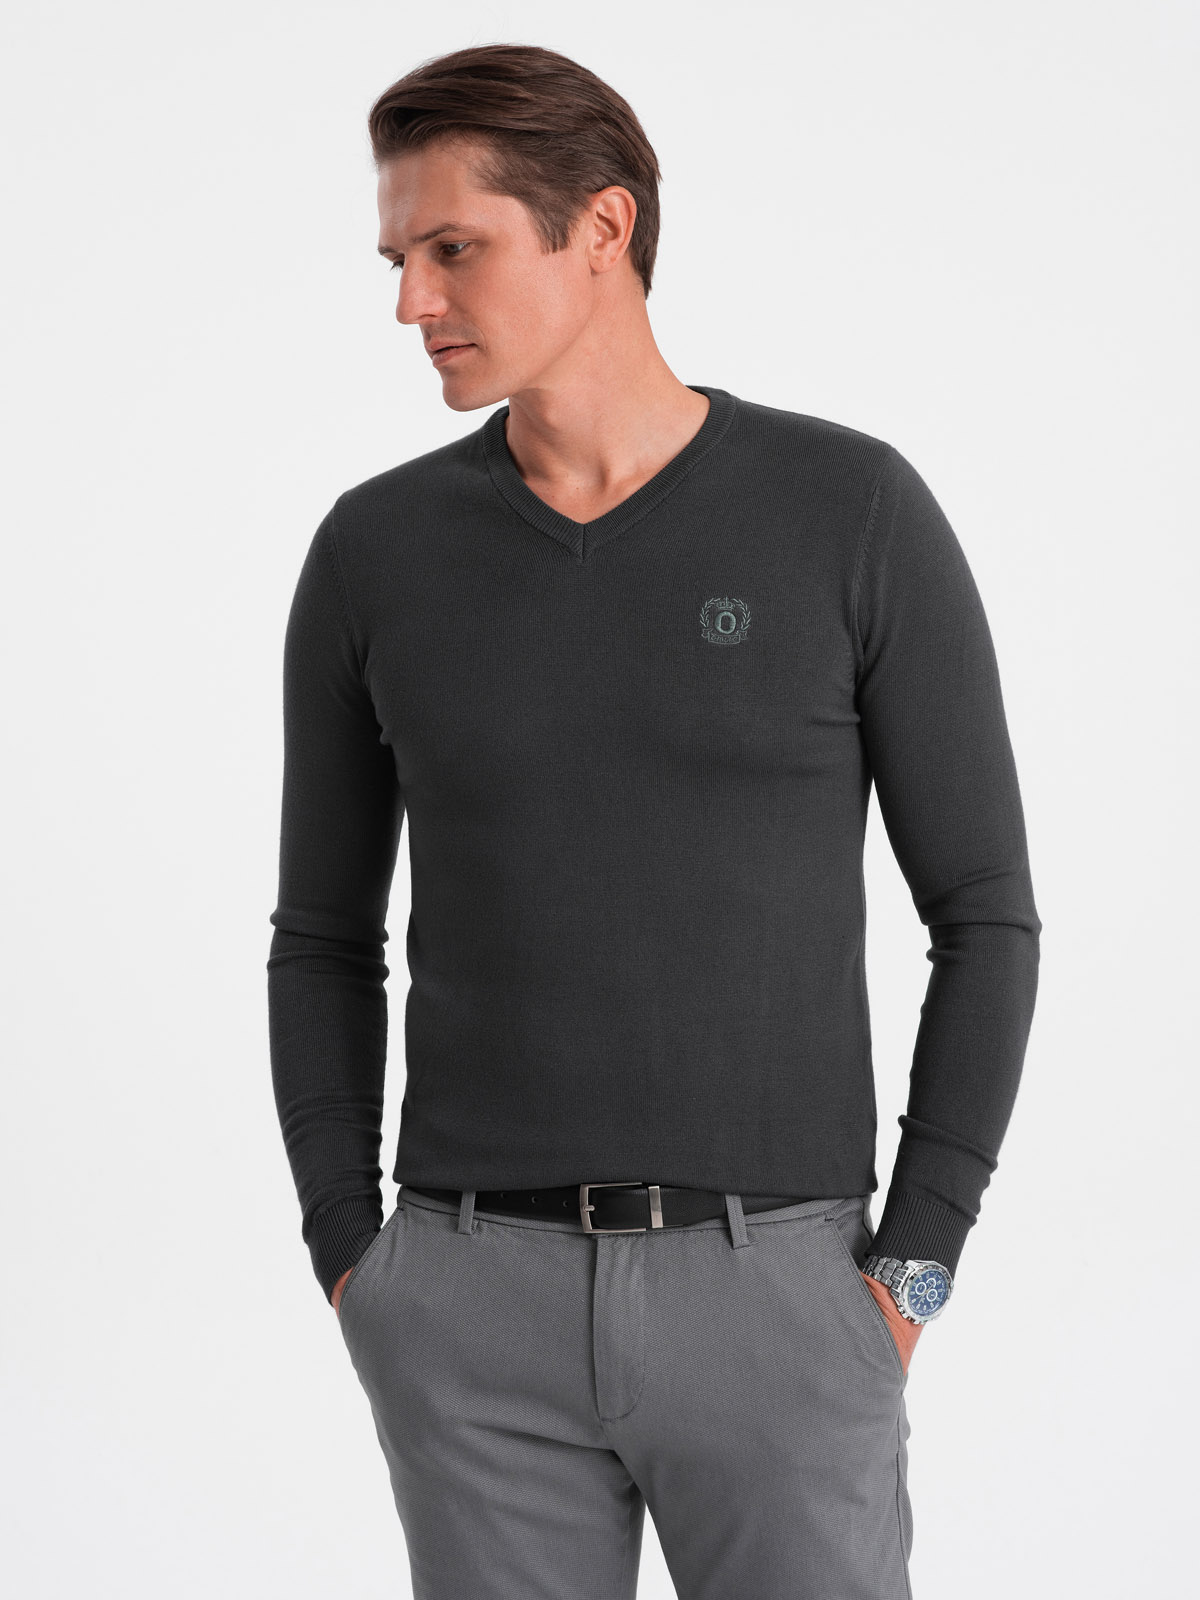 Ombre Elegant men's sweater with a heart neckline - graphite